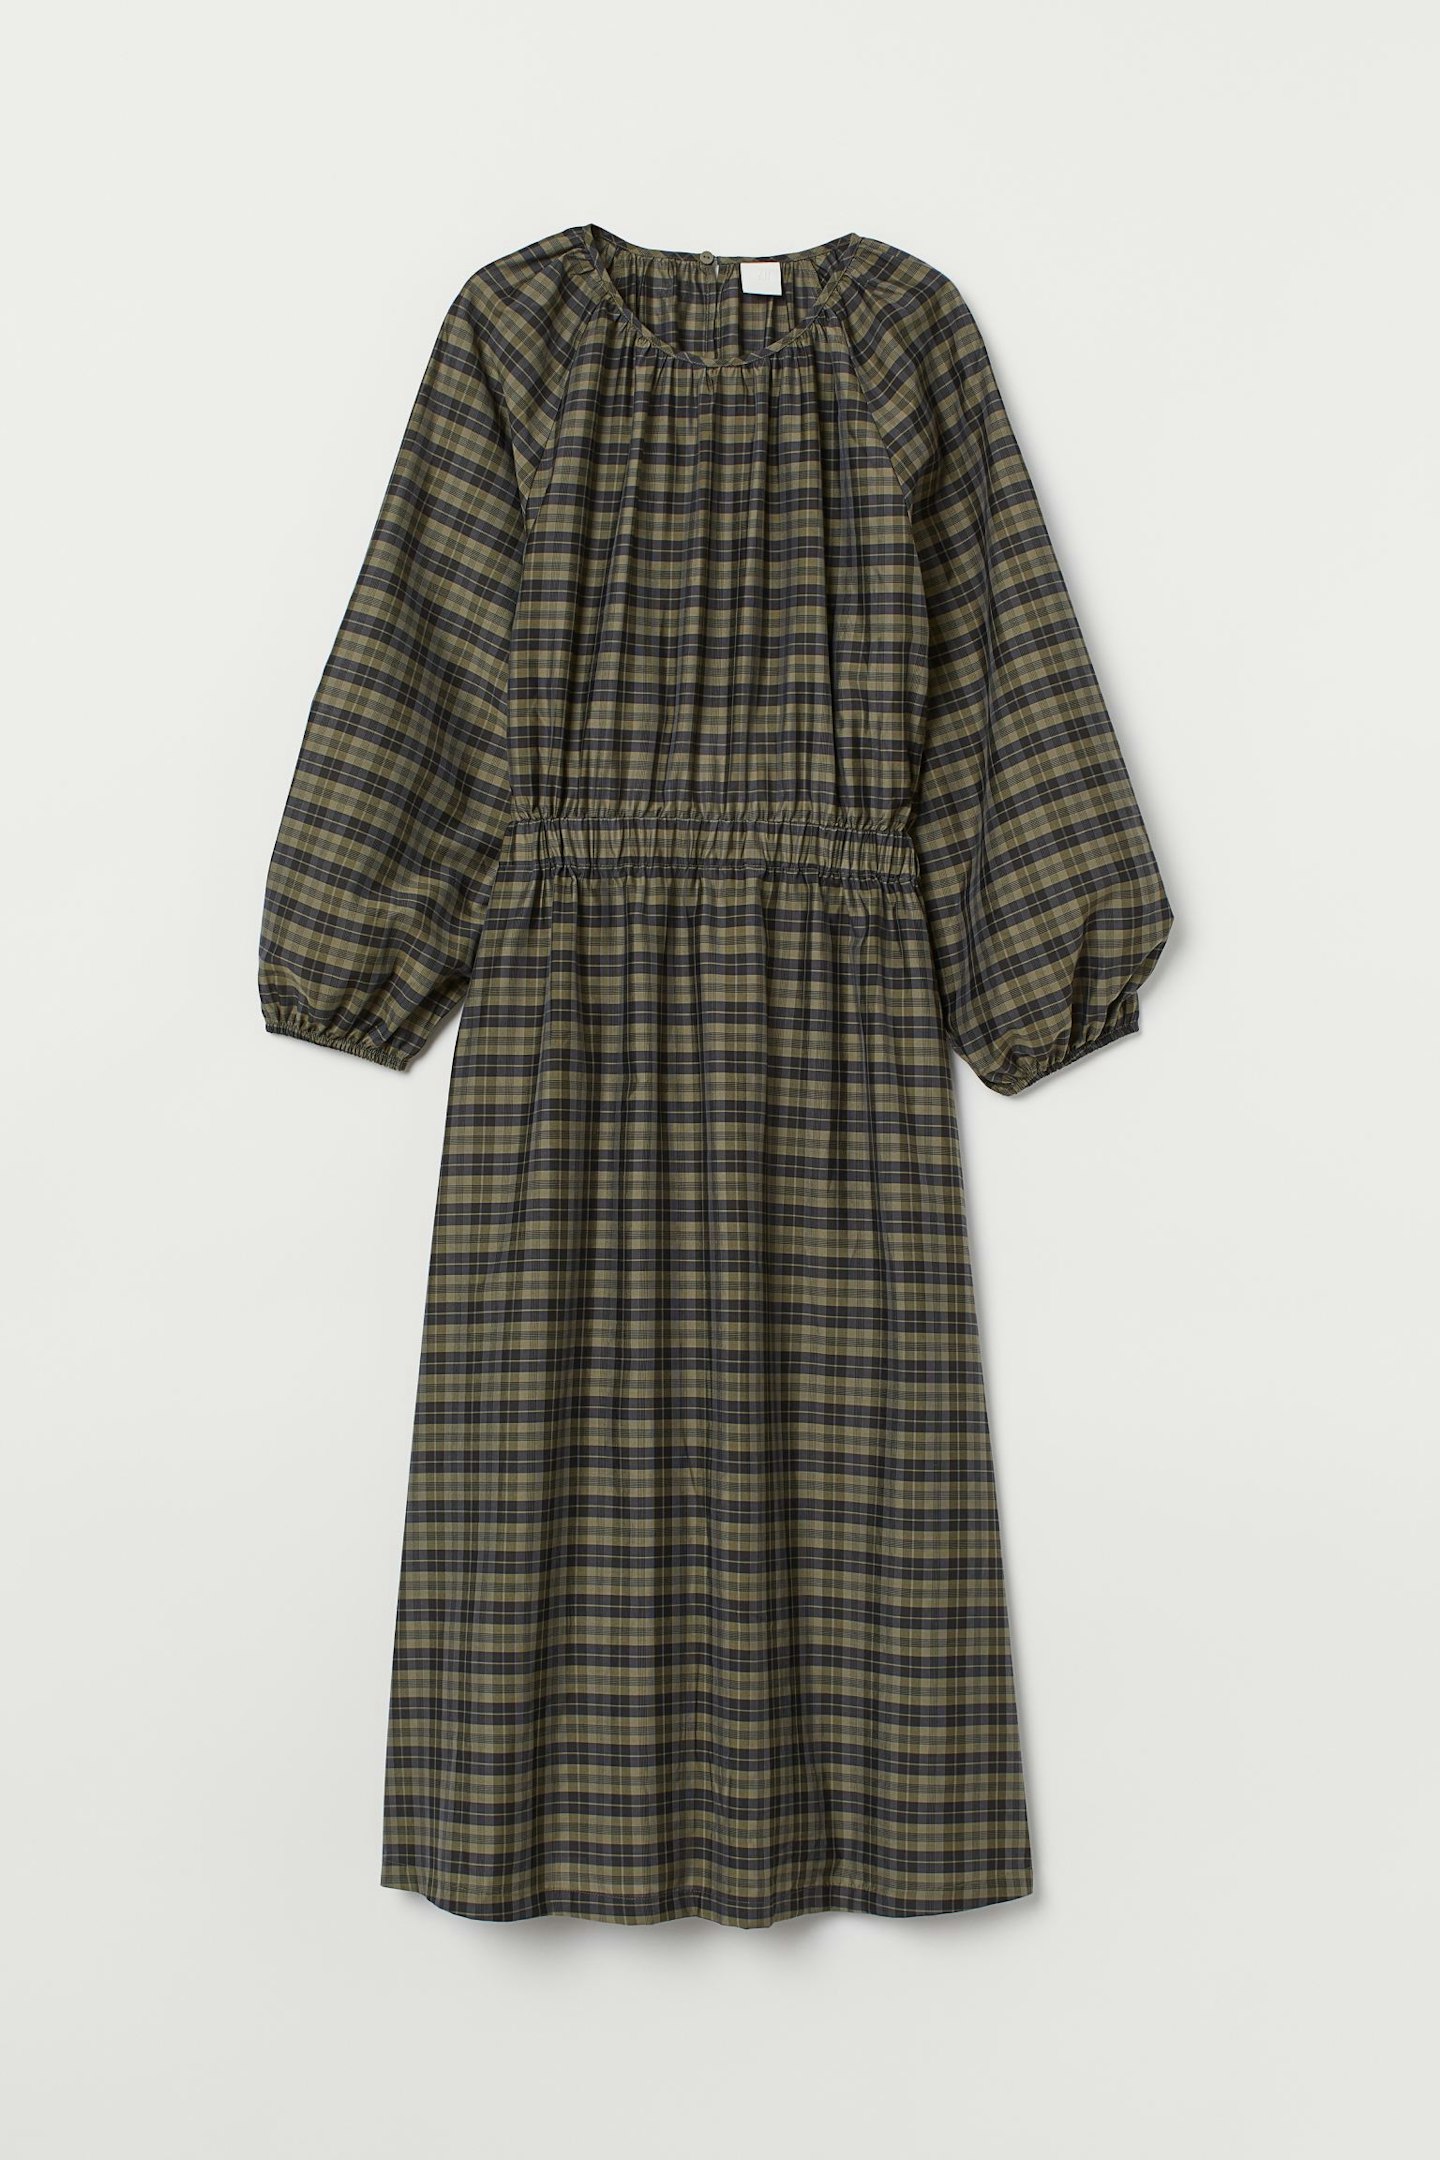 H&M, Modal-Blend Dress, WAS £24.99 NOW £17